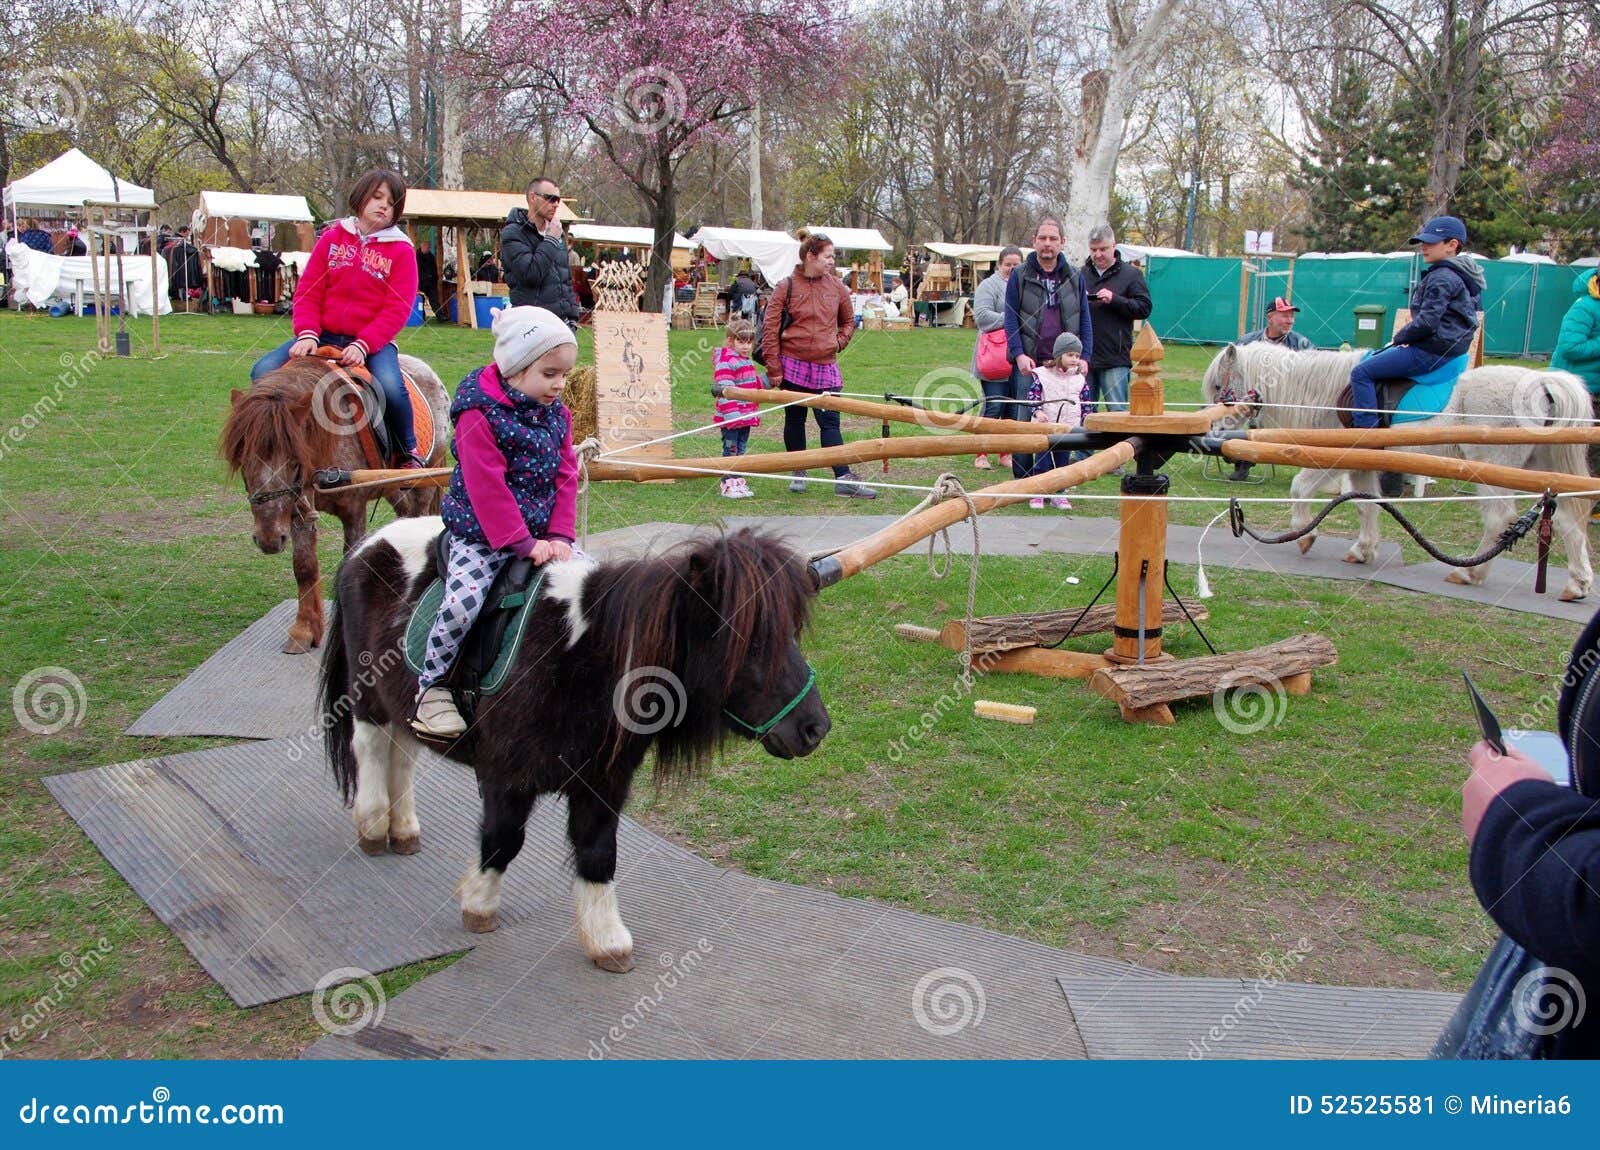 children-riding-ponies-pony-hourses-city-park-budapest-hungary-52525581.jpg